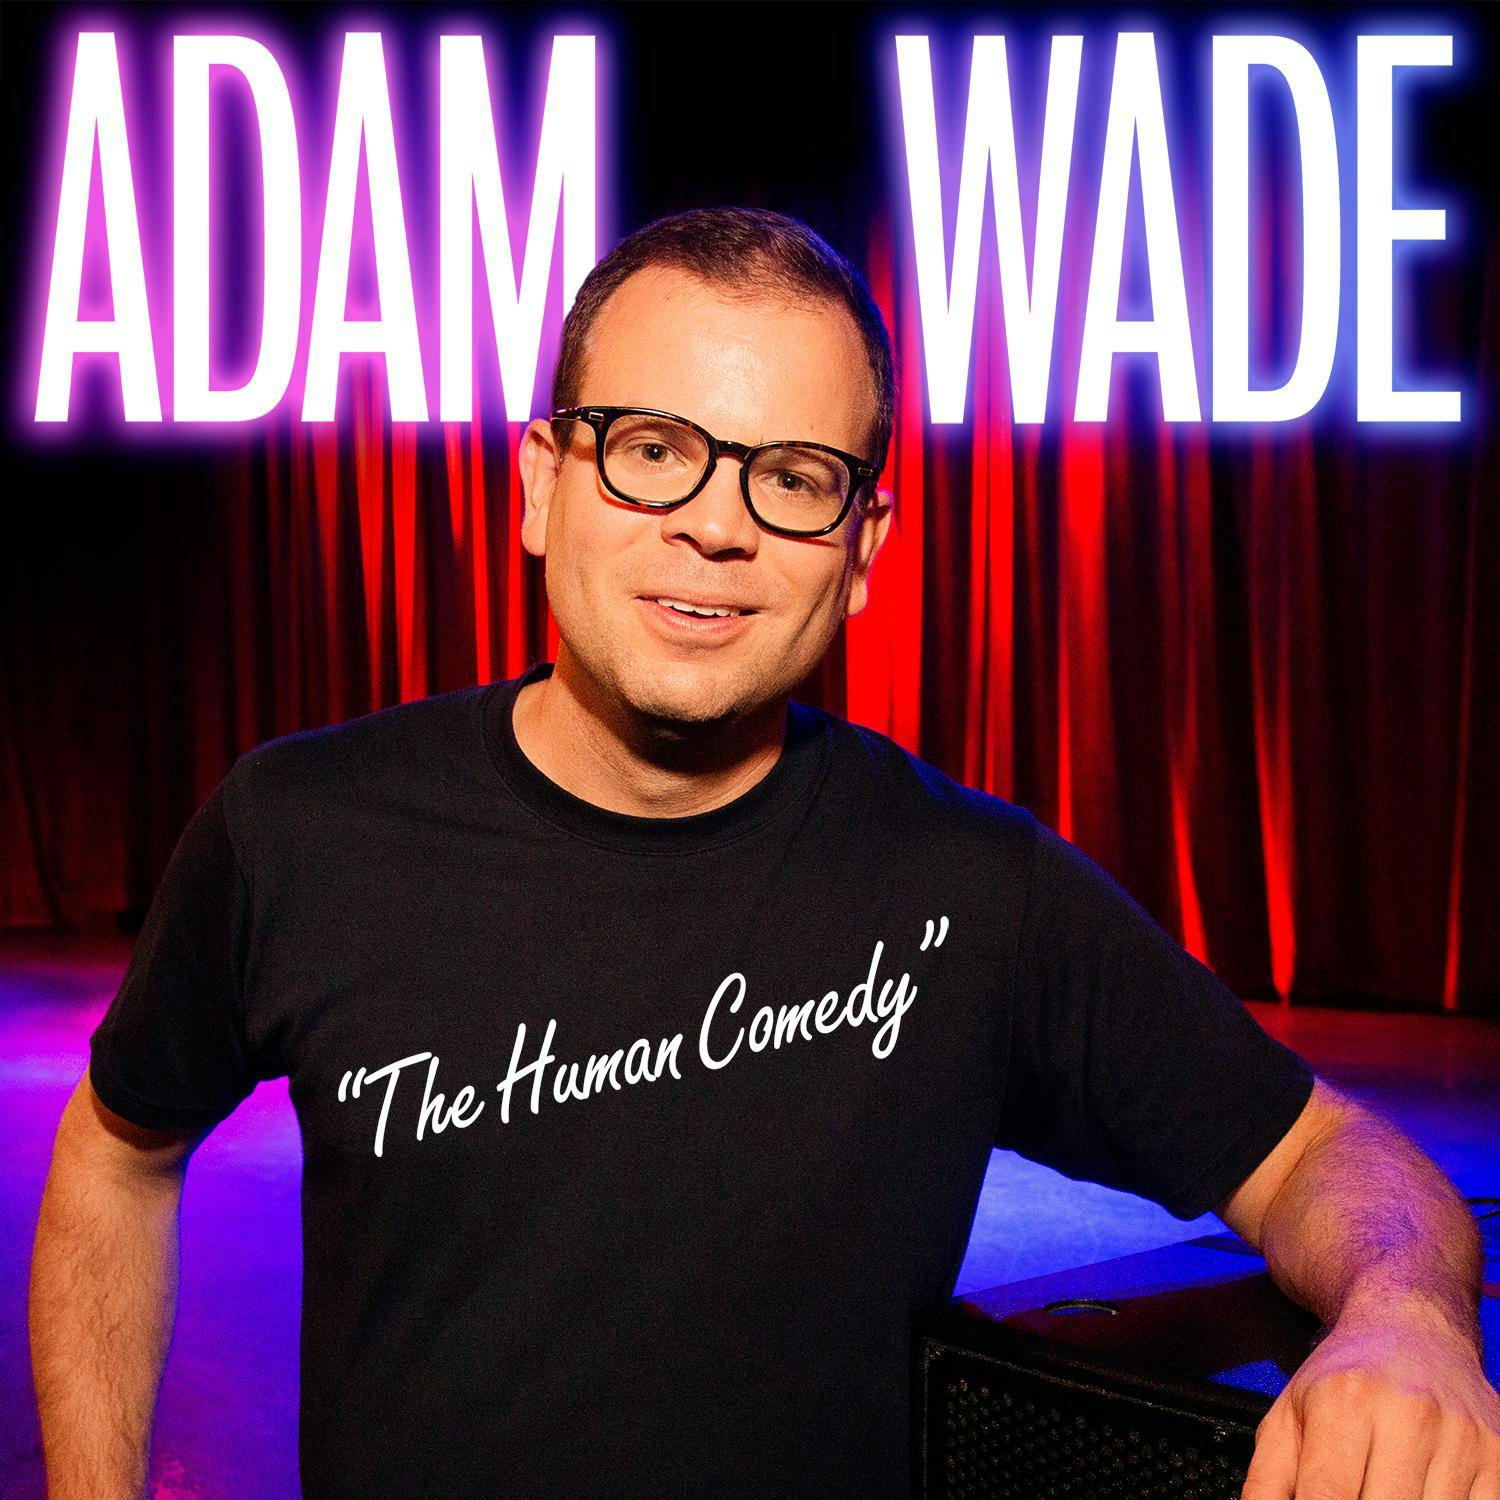 Adam Wade: The Human Comedy - Adam Wade